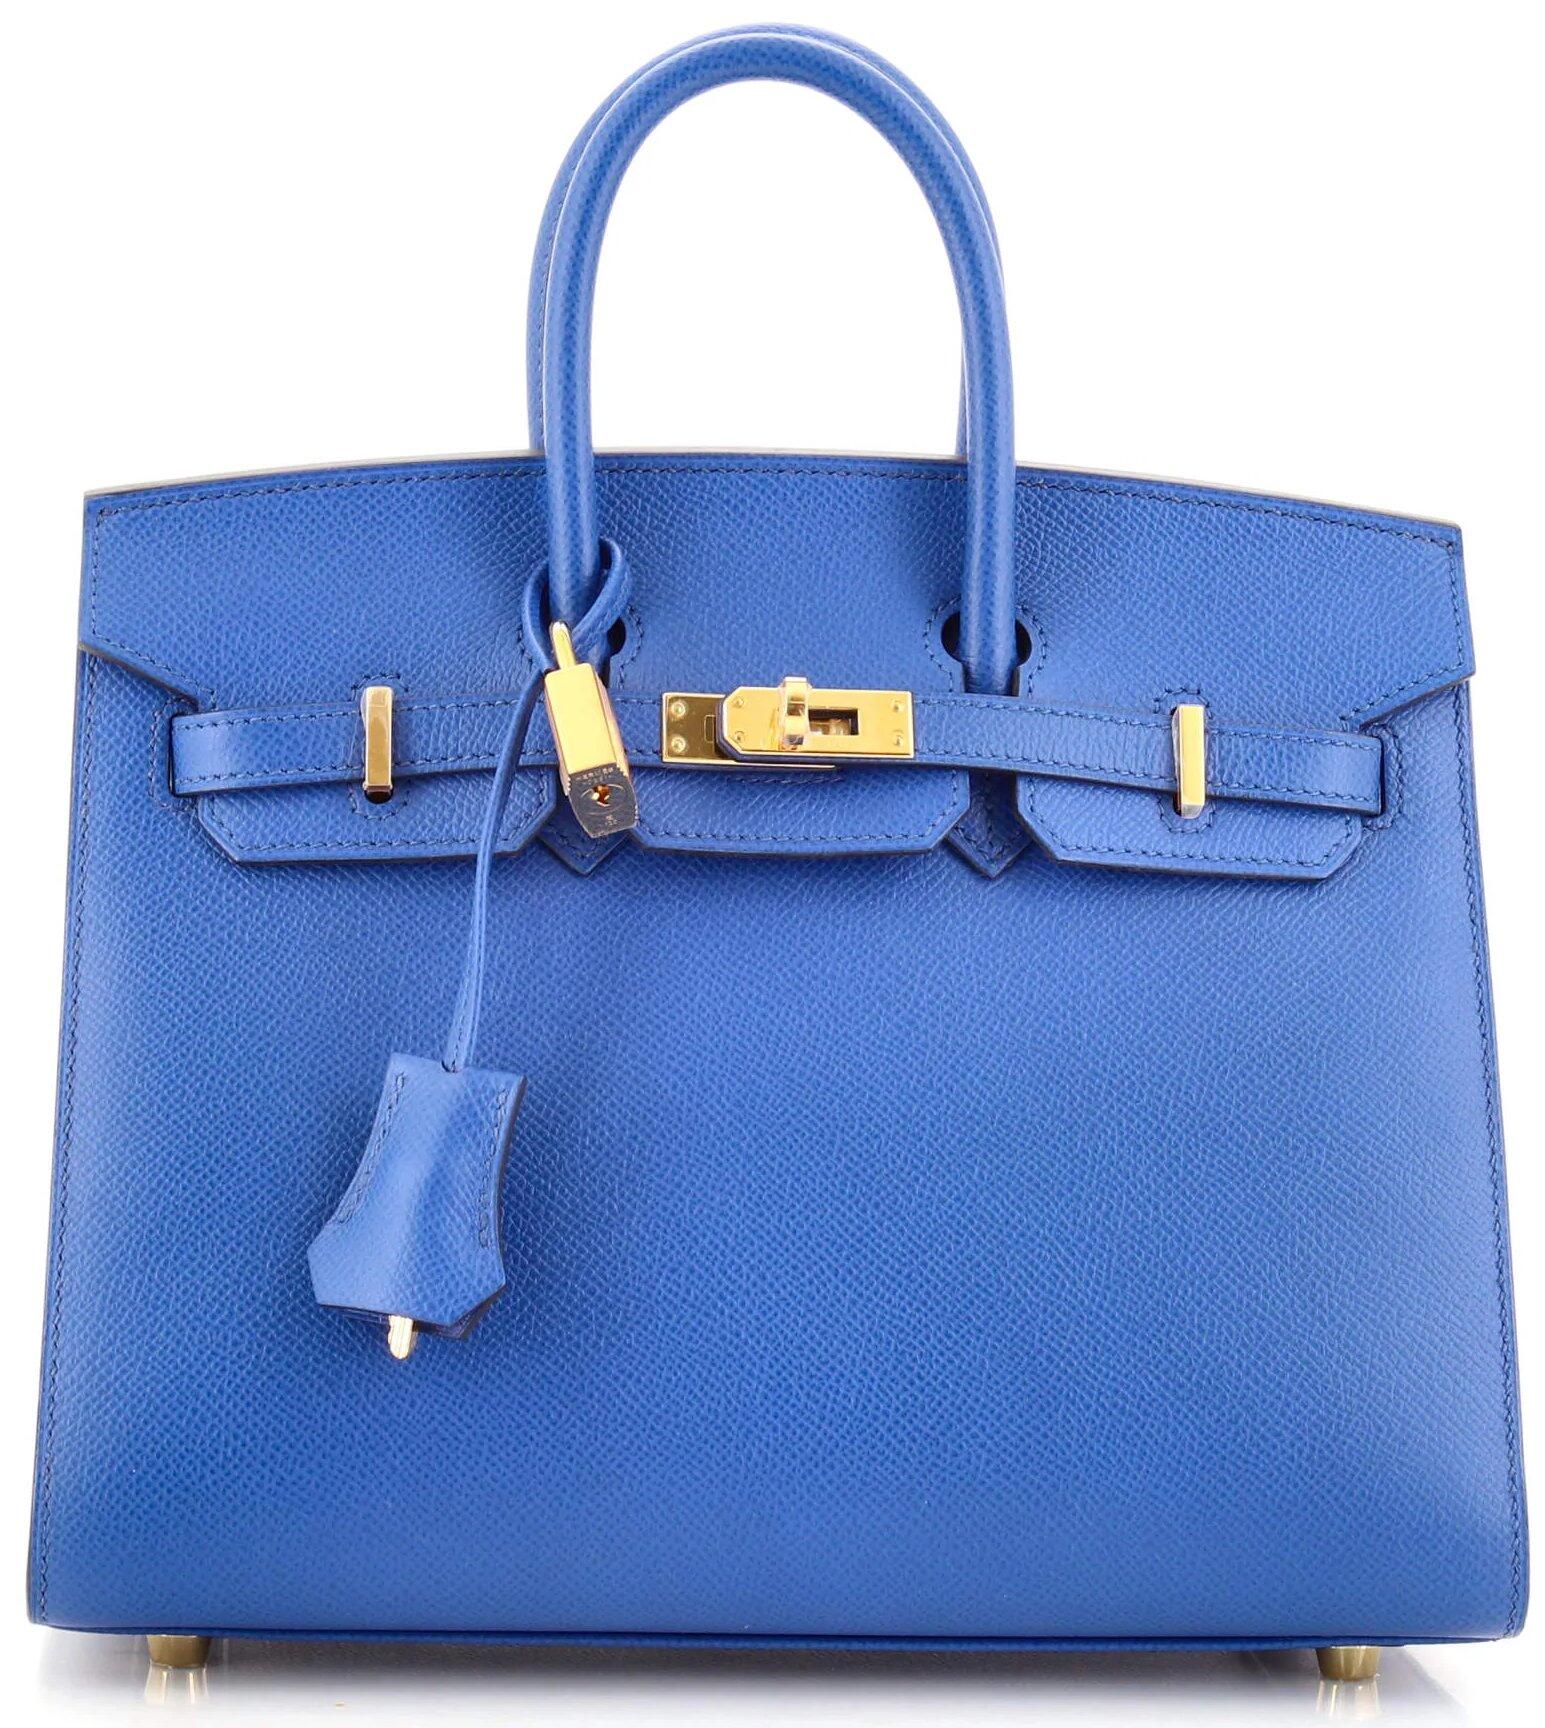 hermes birkinbag bleu leather